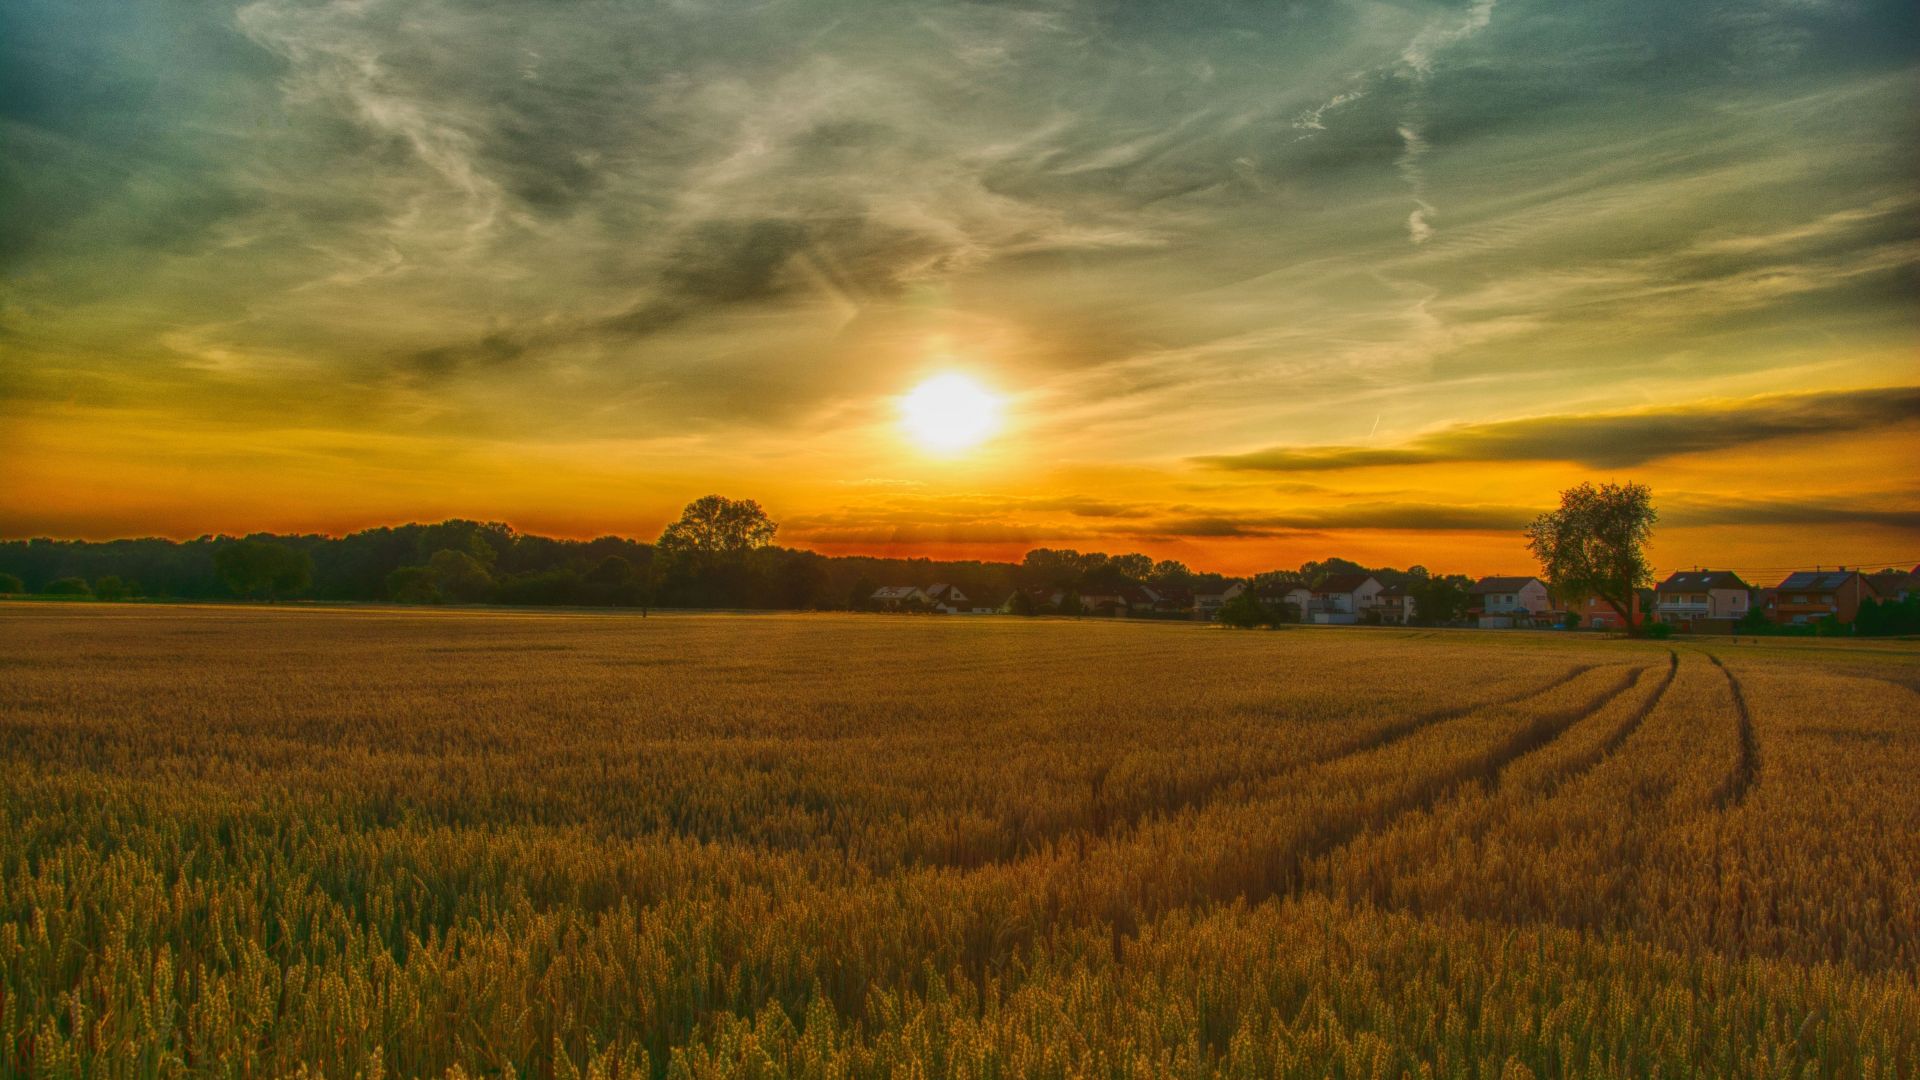 Summer, sunset, farm, landscape, nature wallpaper, HD image, picture, background, 0296d9